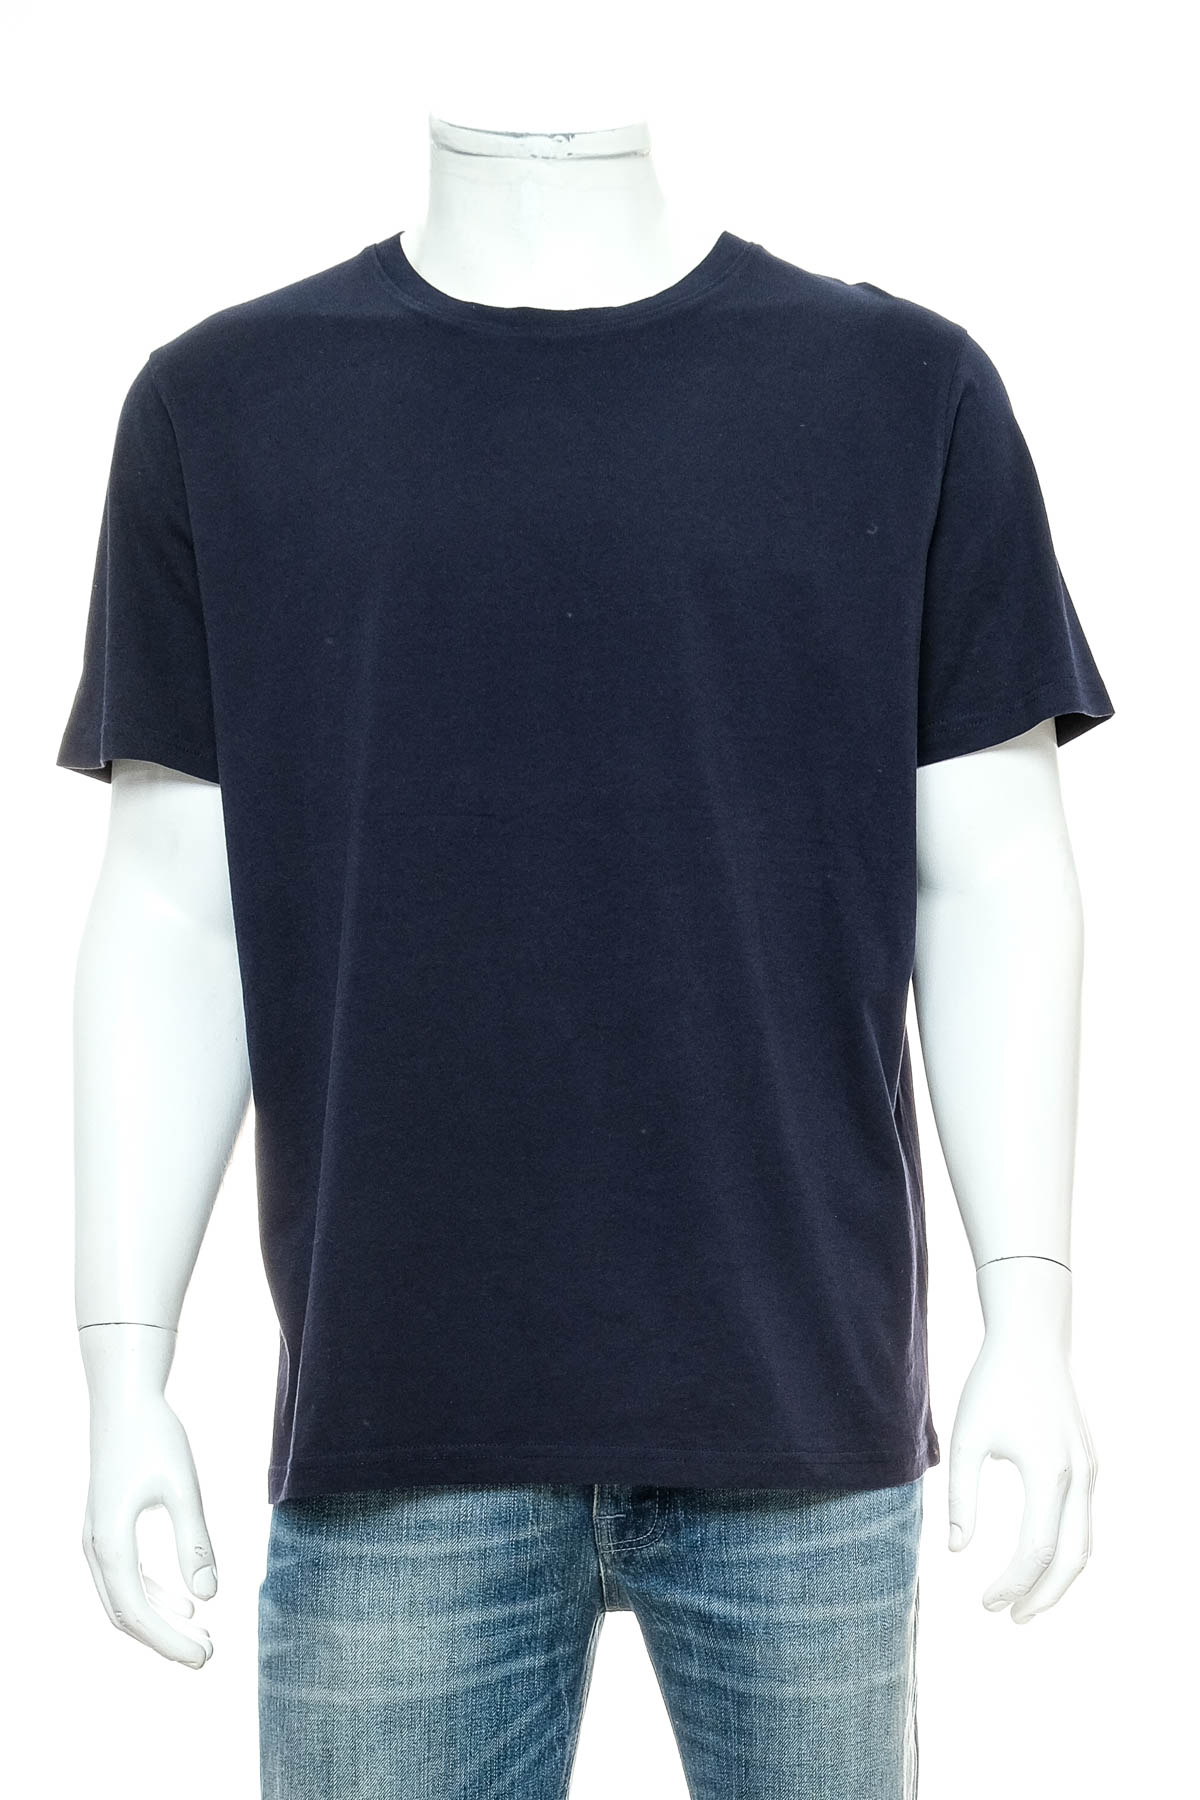 Men's T-shirt - The Basics x C&A - 0